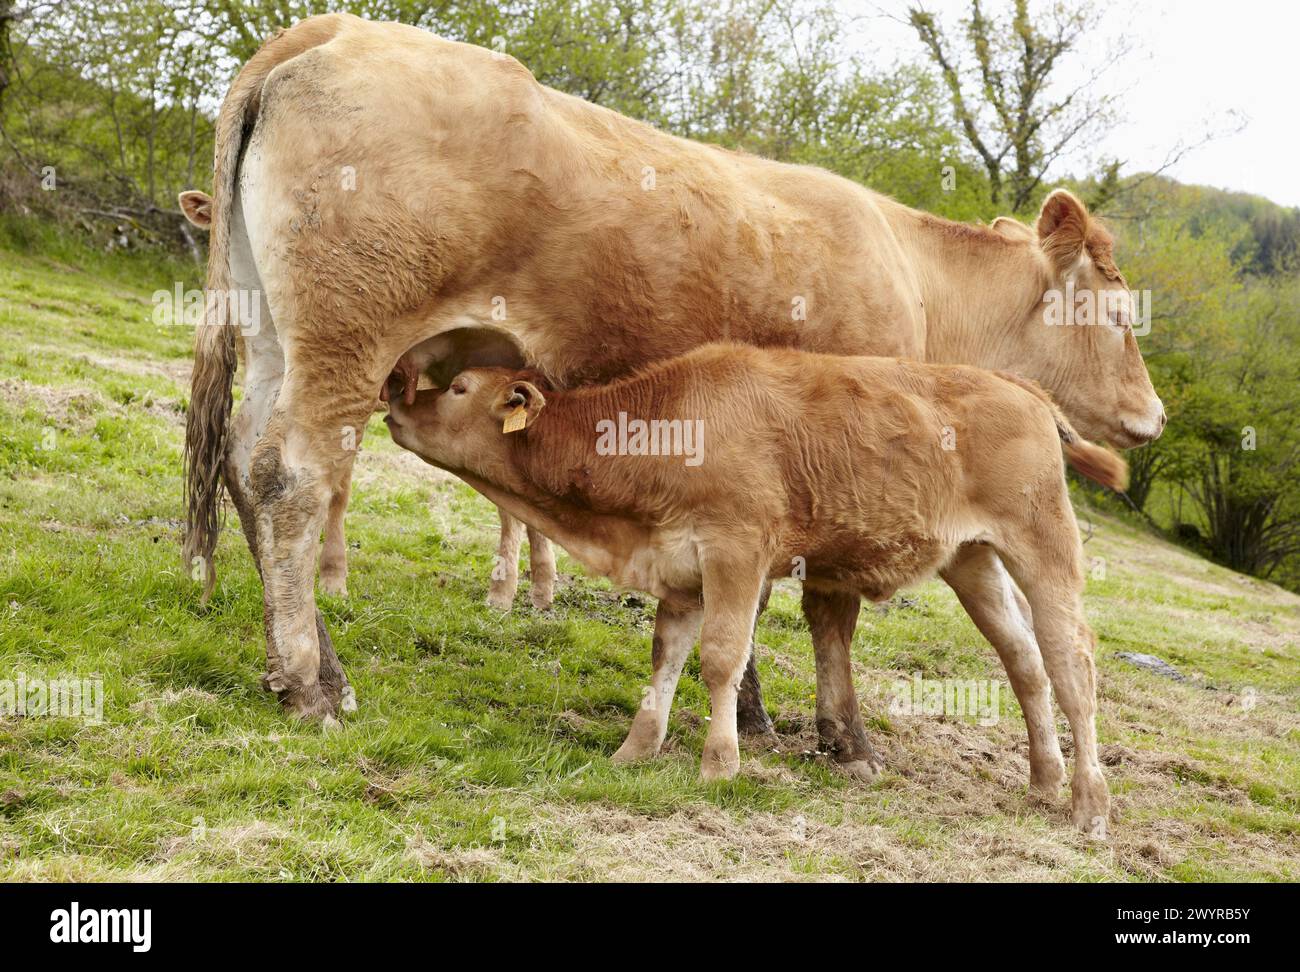 Limousin cattle, Beizama, Gipuzkoa, Basque Country, Spain. Stock Photo